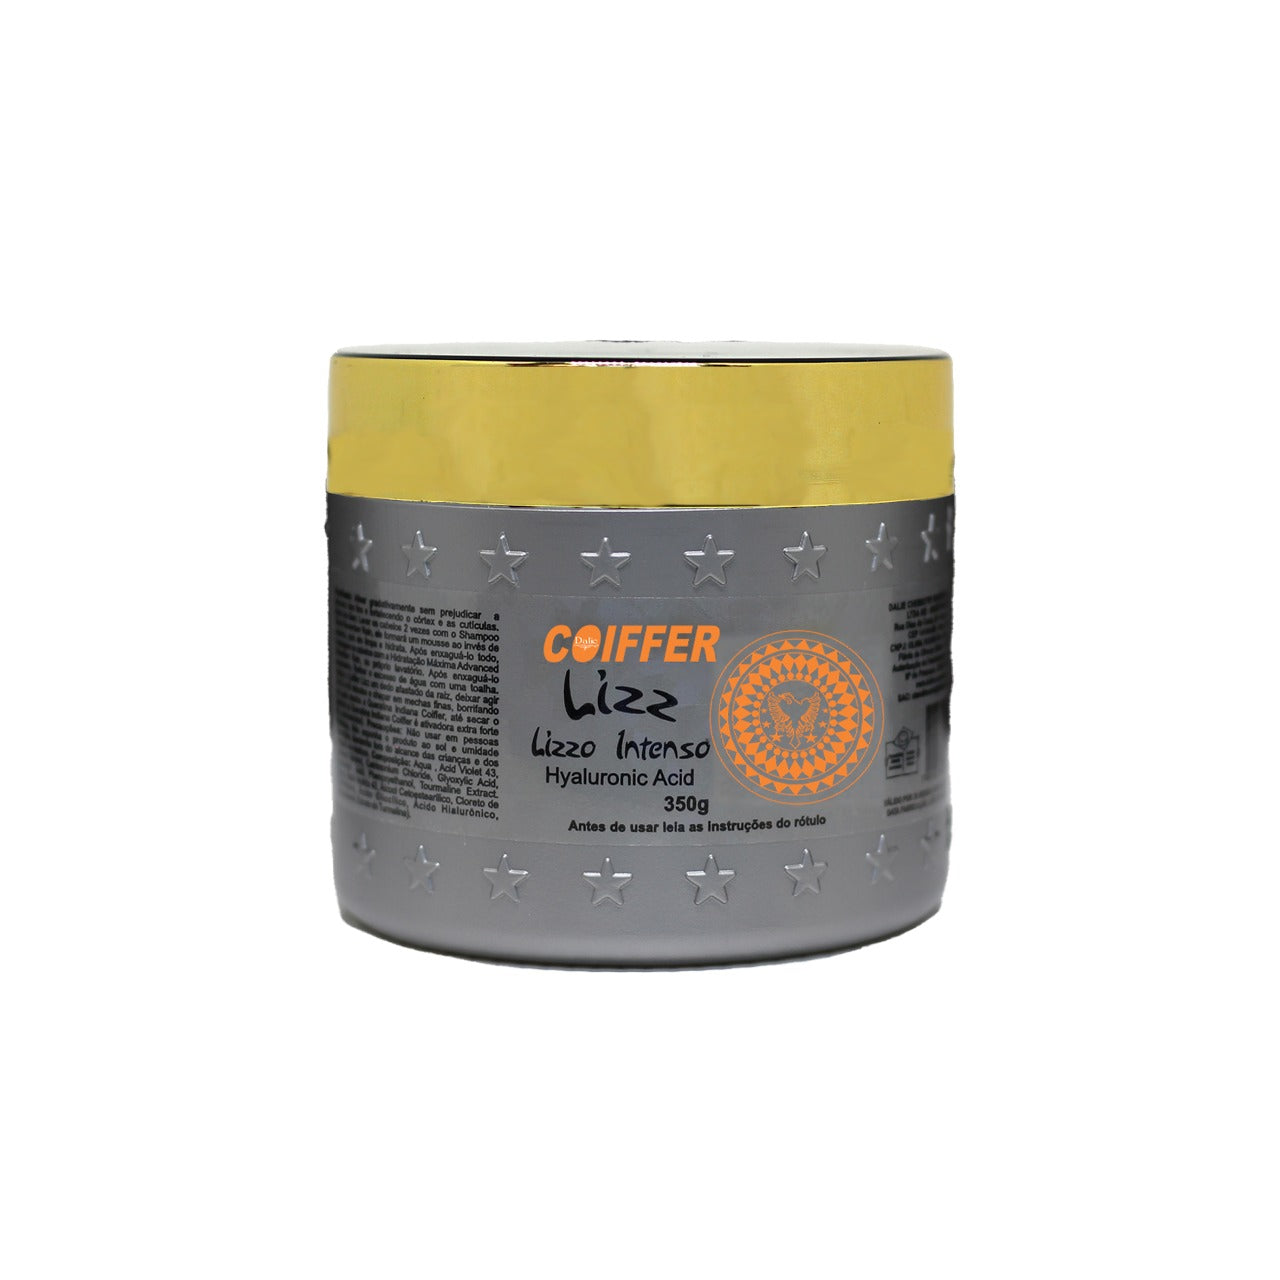 Coiffer Brazilian Keratin Treatment Coiffer Lizz Progressive Brush 350g / 12.3 fl oz